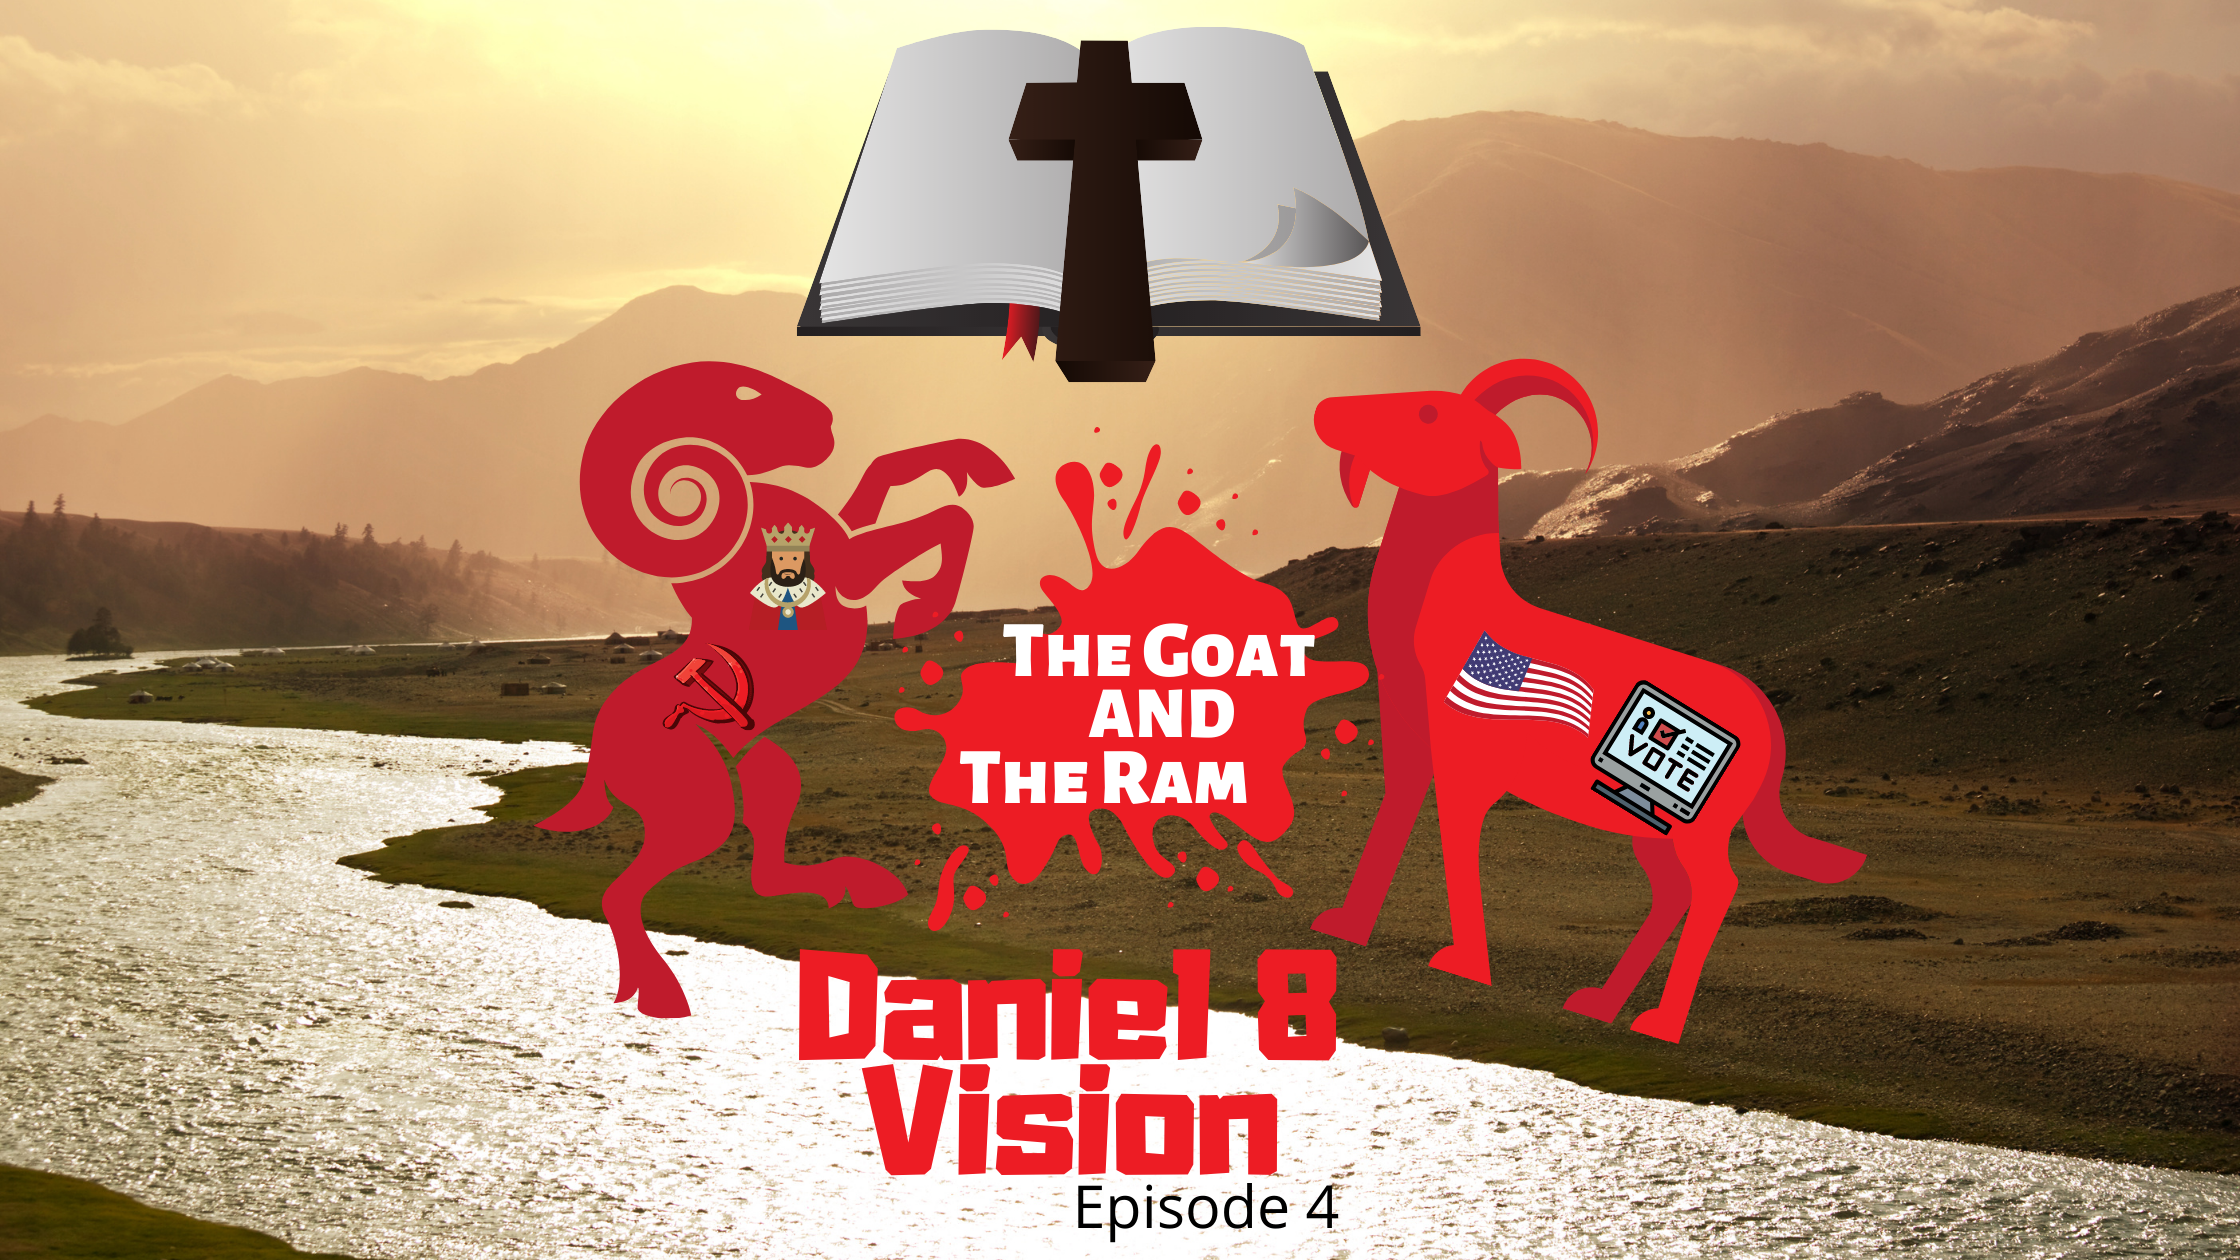 Daniel 8 vision america vs communism